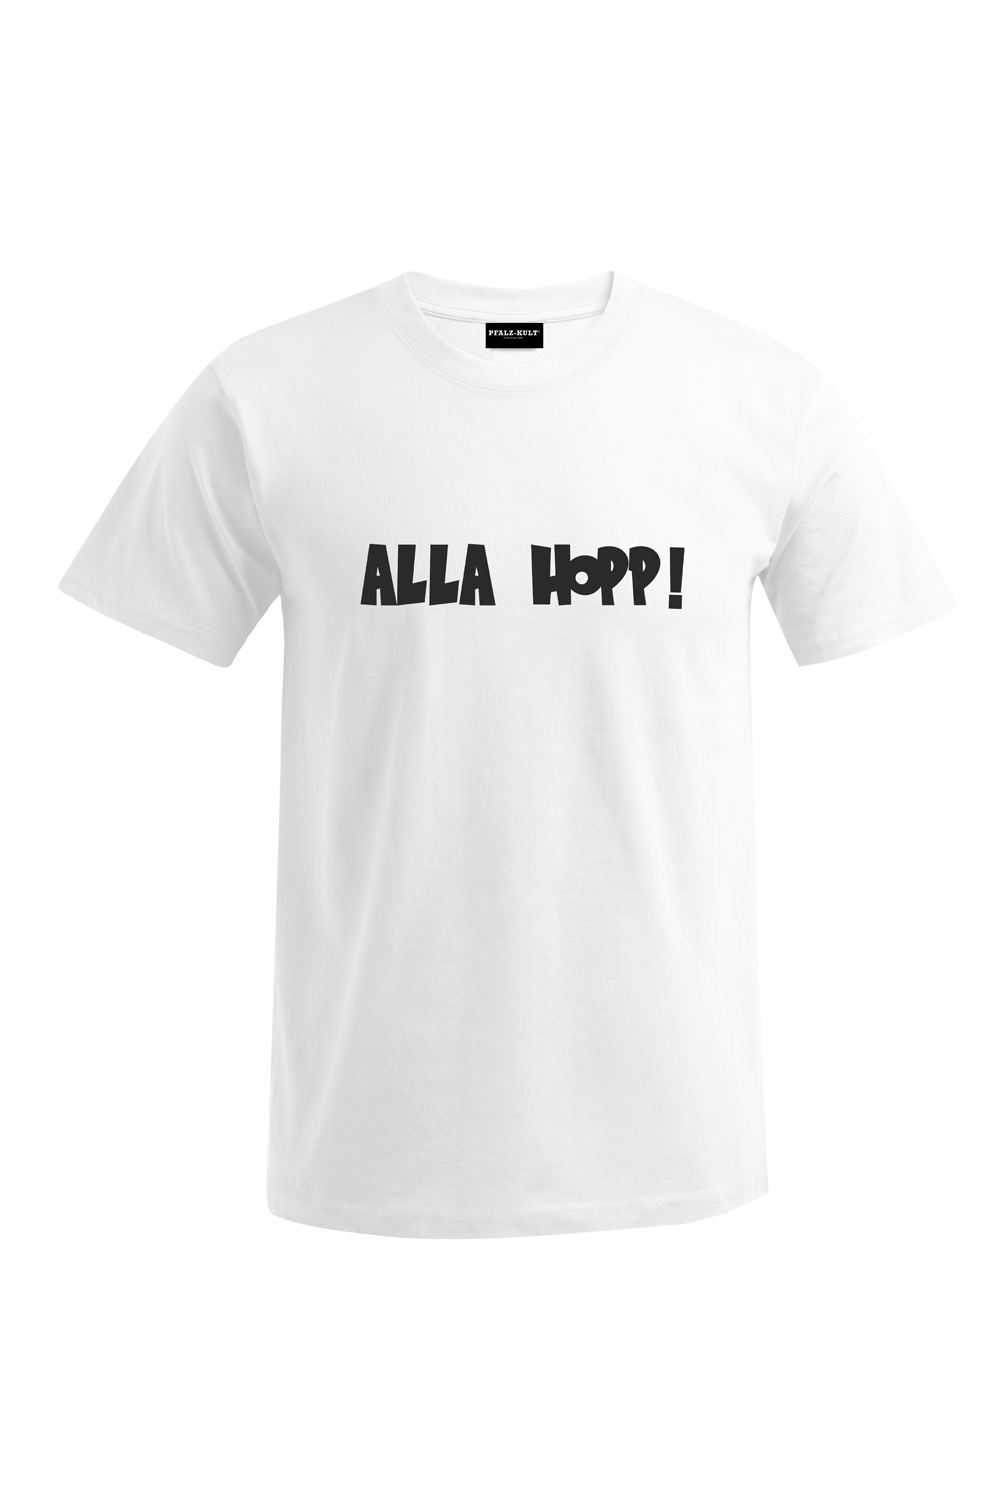 Alla Hopp - Männer T-Shirt - Unisex